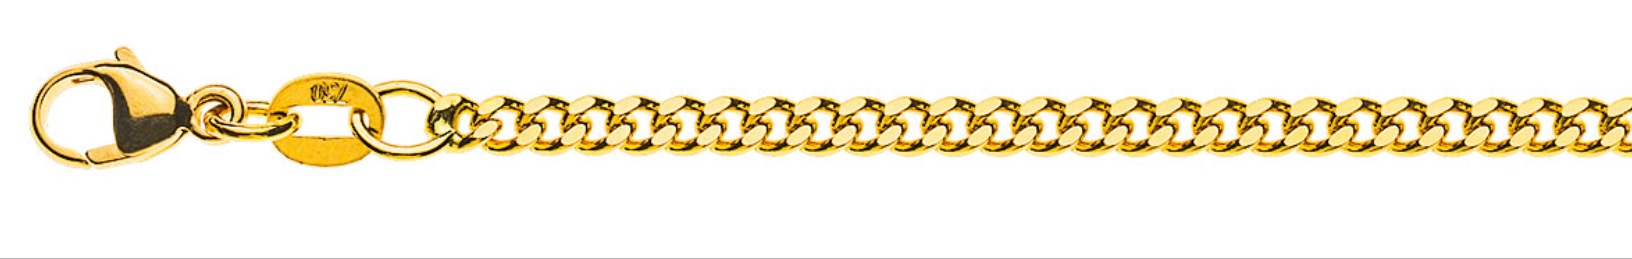 AURONOS Prestige Necklace yellow gold 18K curb chain polished 60cm 2.6mm